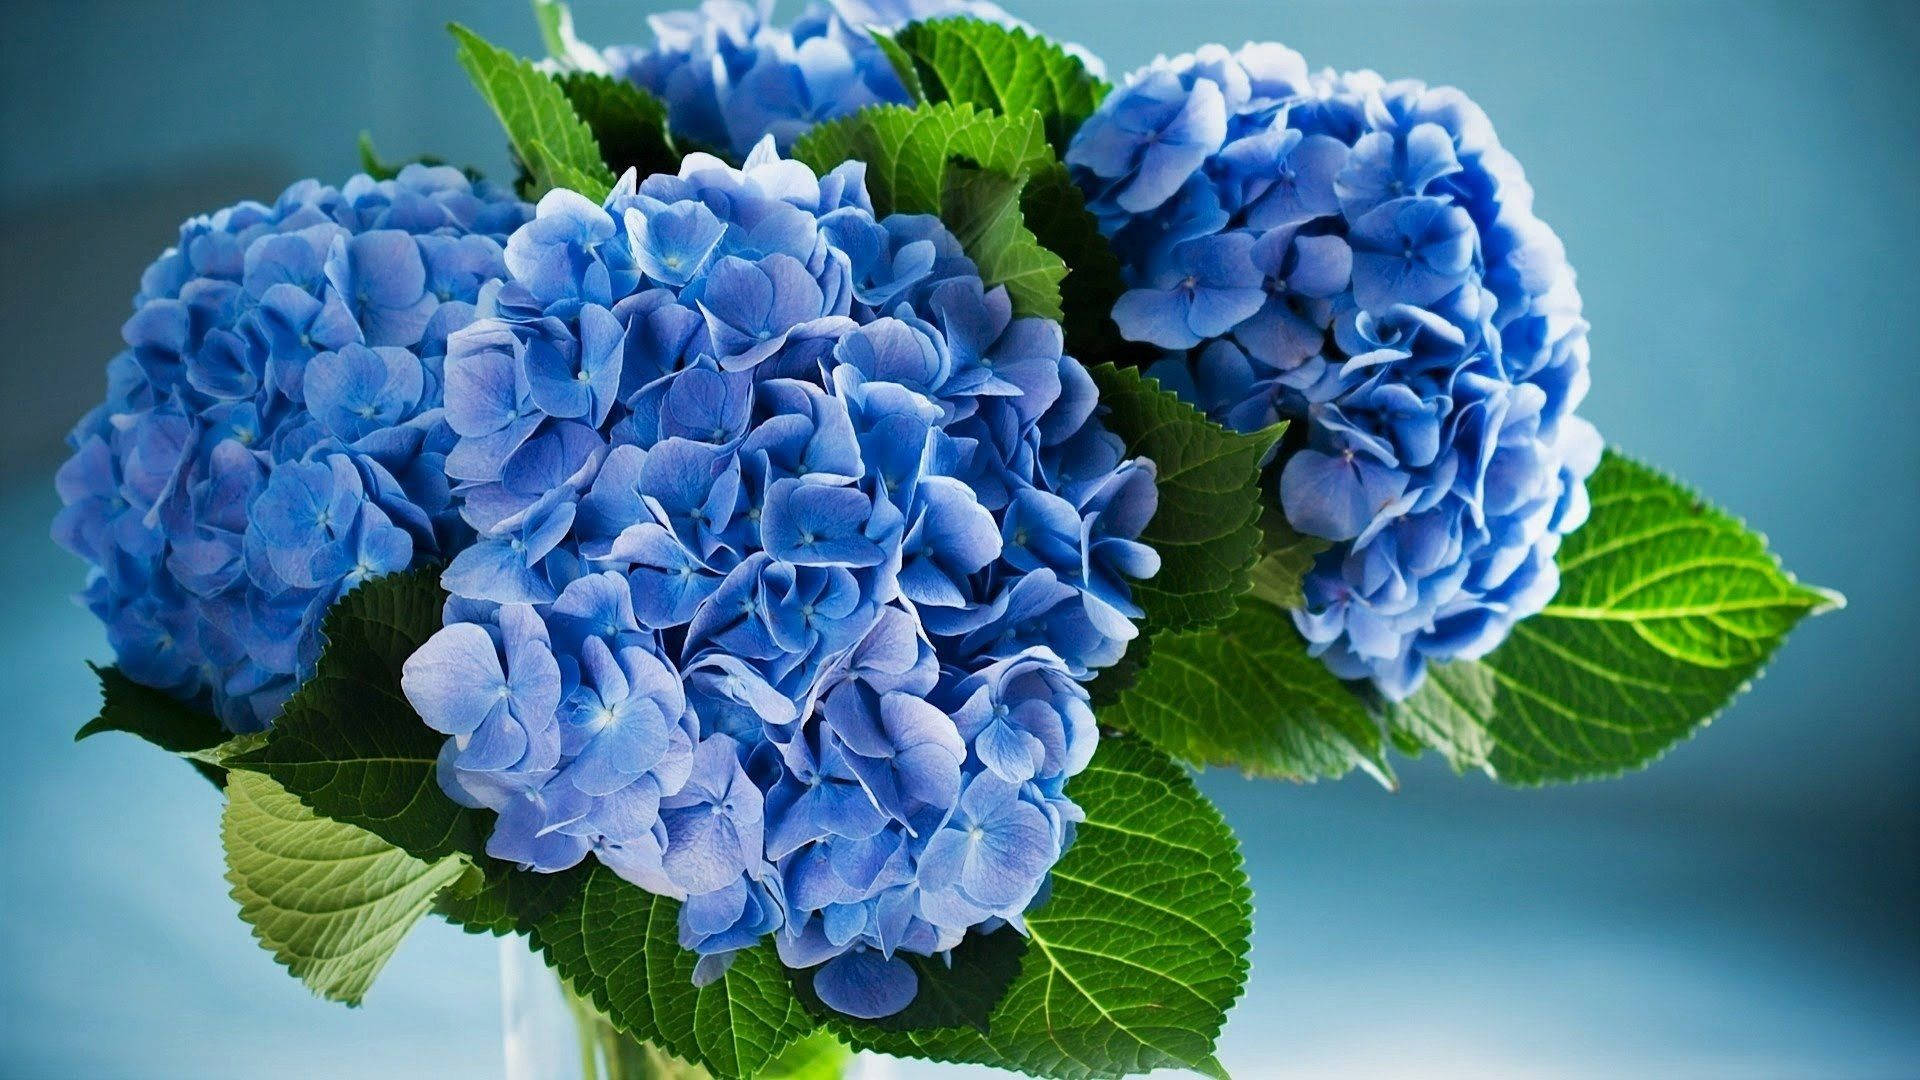 Blue Hydrangea Flowers With Leaves Wallpaper